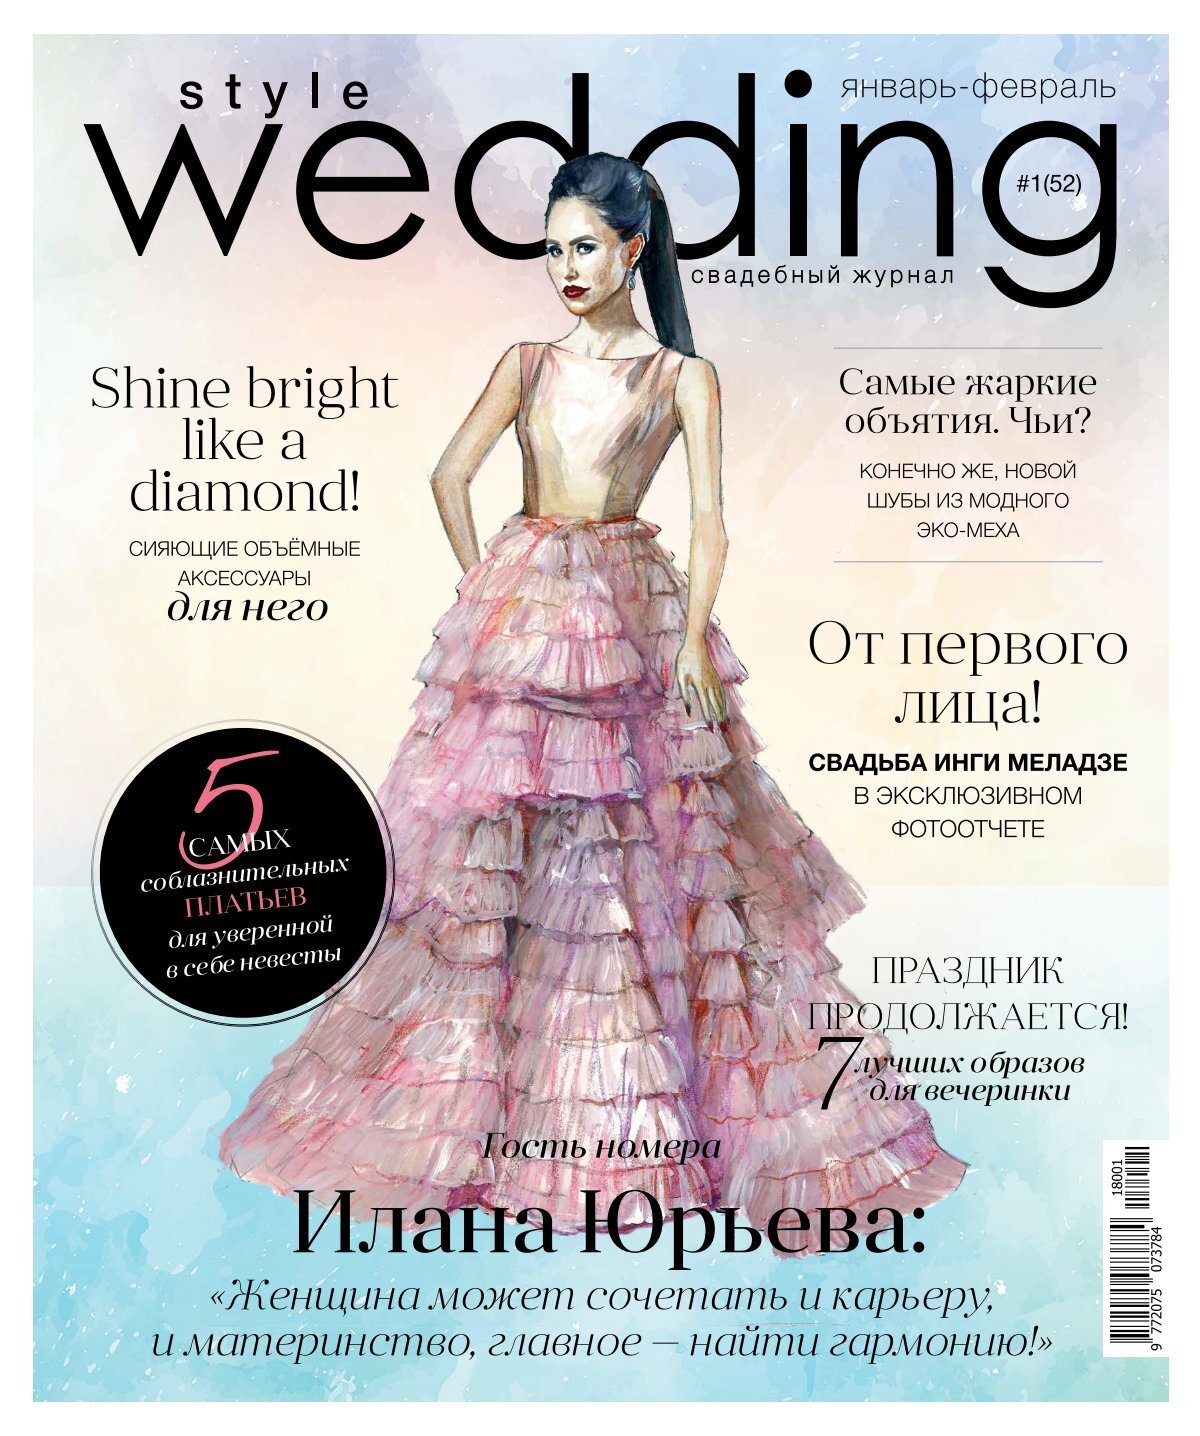 Свадебный журнал Style Wedding №52